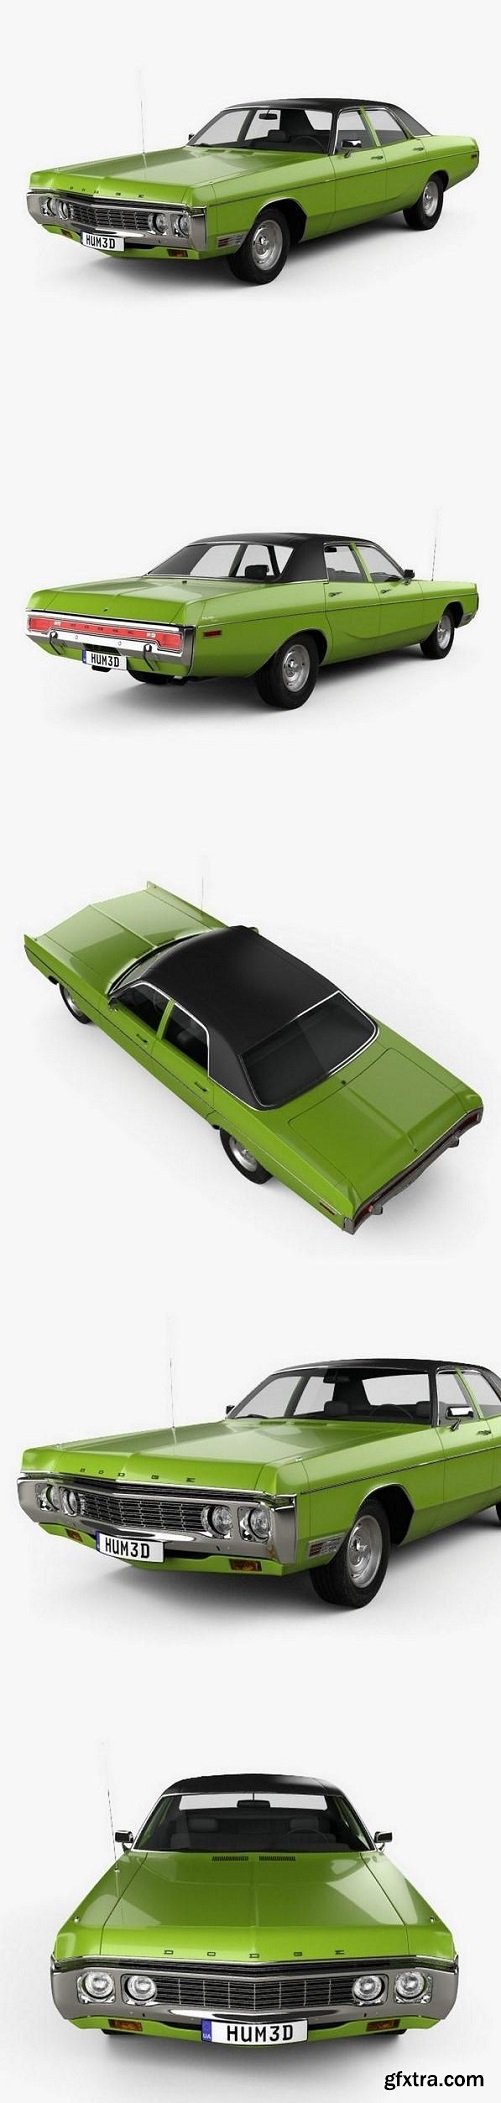 Dodge Polara Hardtop Coupe 1970